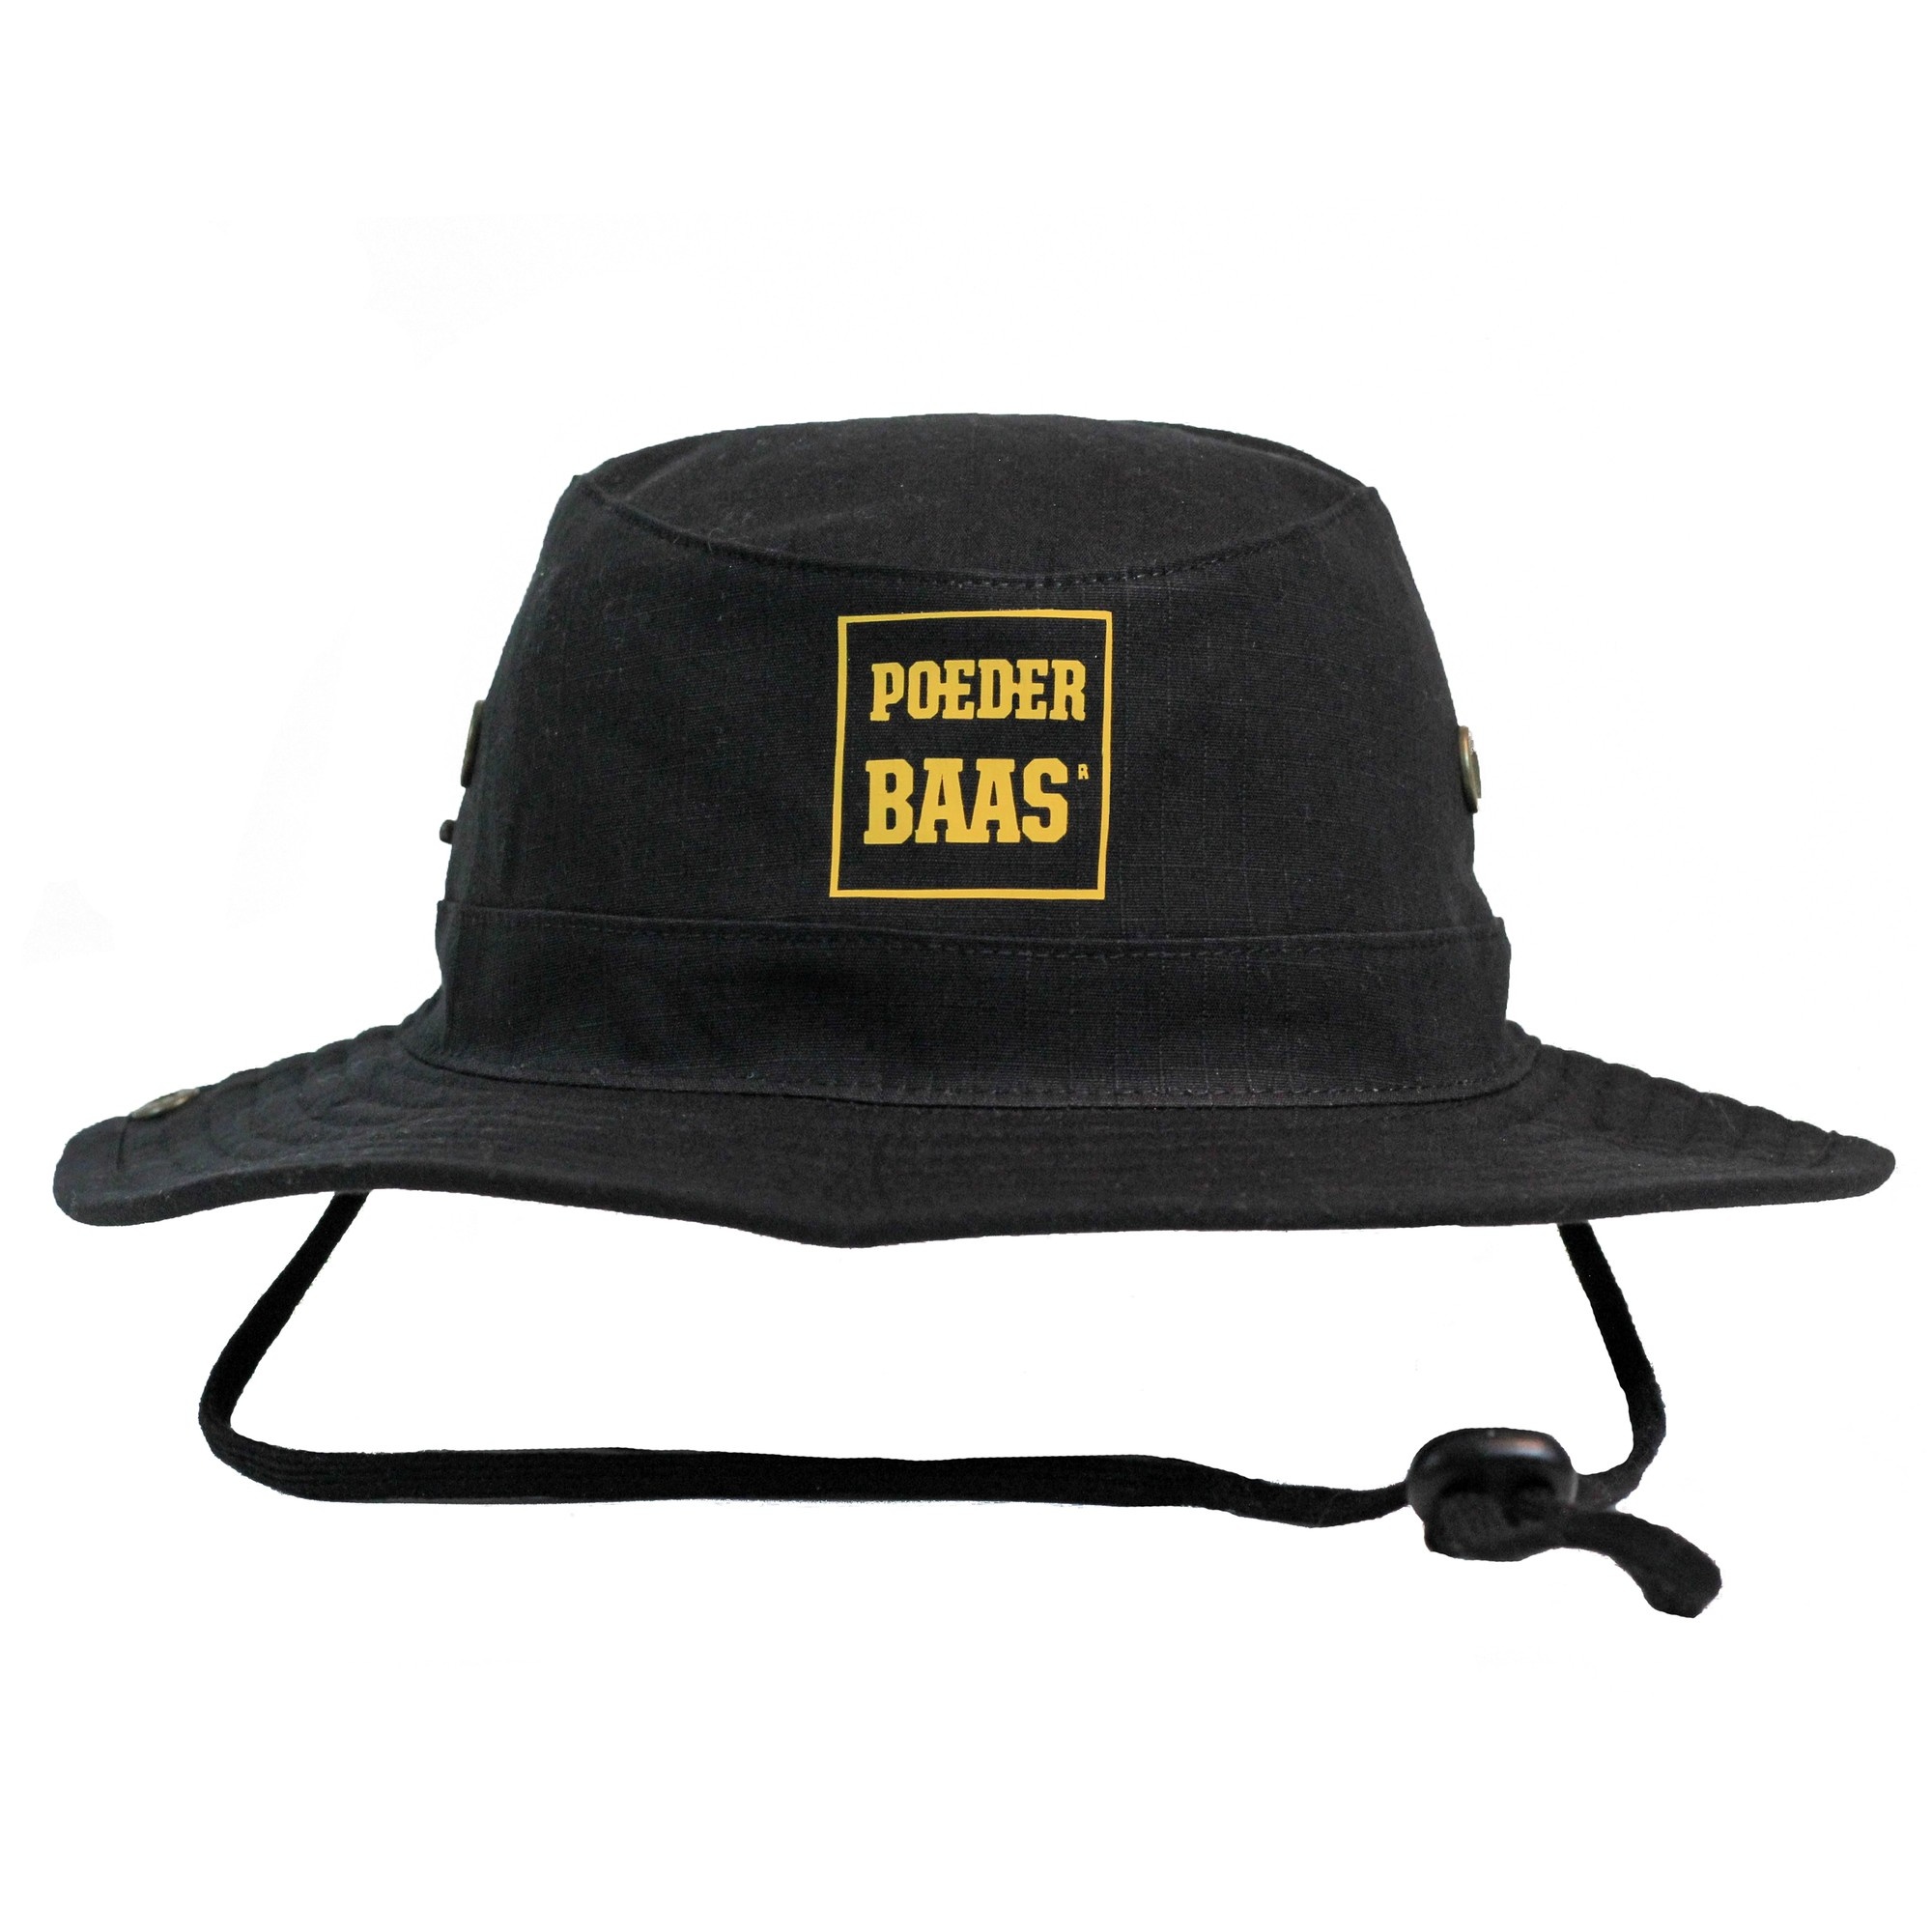 calcium stapel inhoudsopgave Bucket hat met okergeel Poederbaas logo - zwart - Create your signature,  Enjoy Poederbaas!